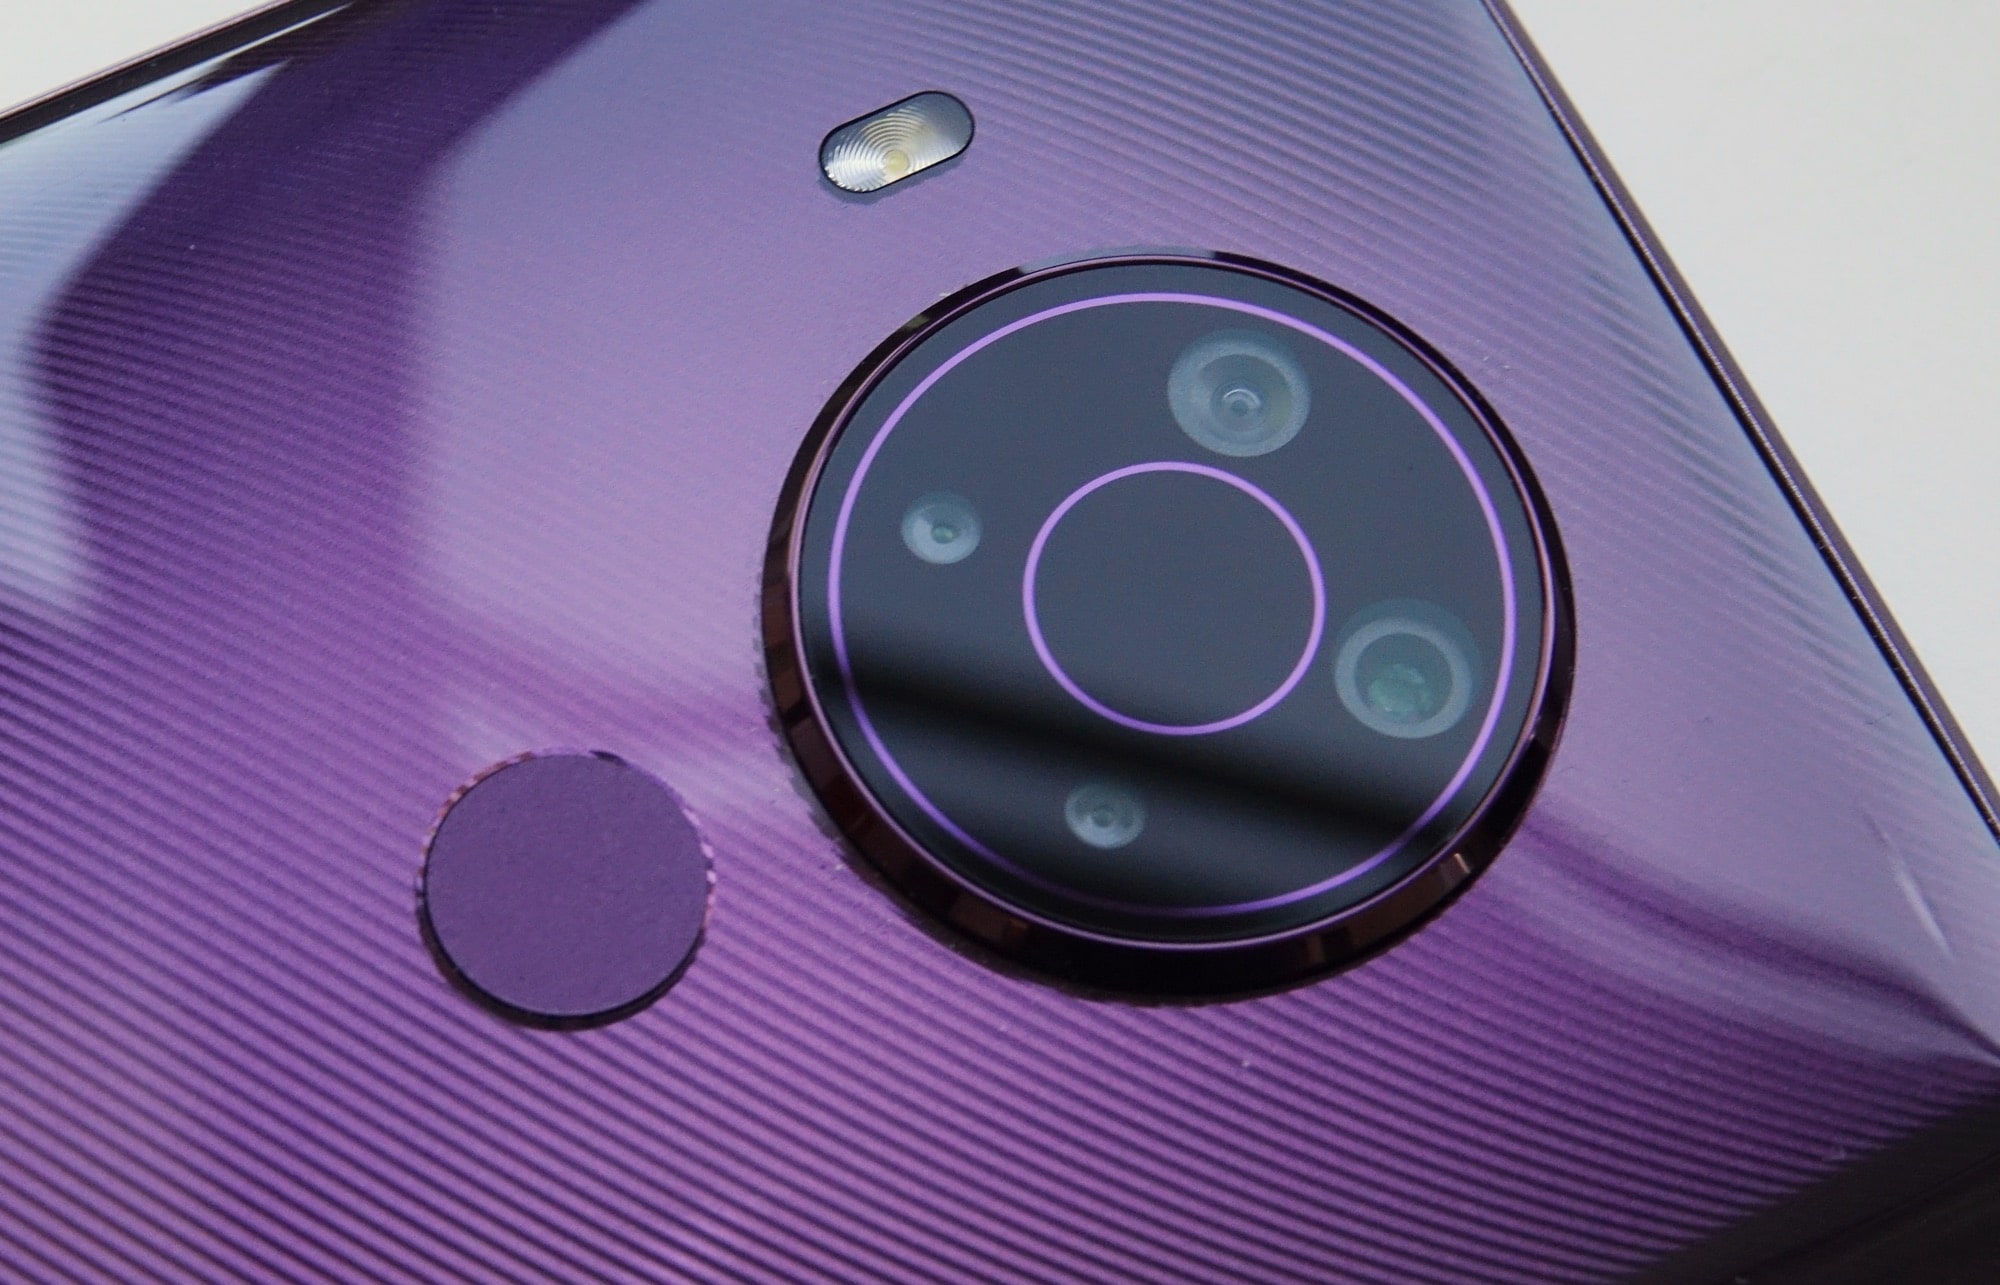 The fingerprint sensor and the cameras on the Nokia 5.4